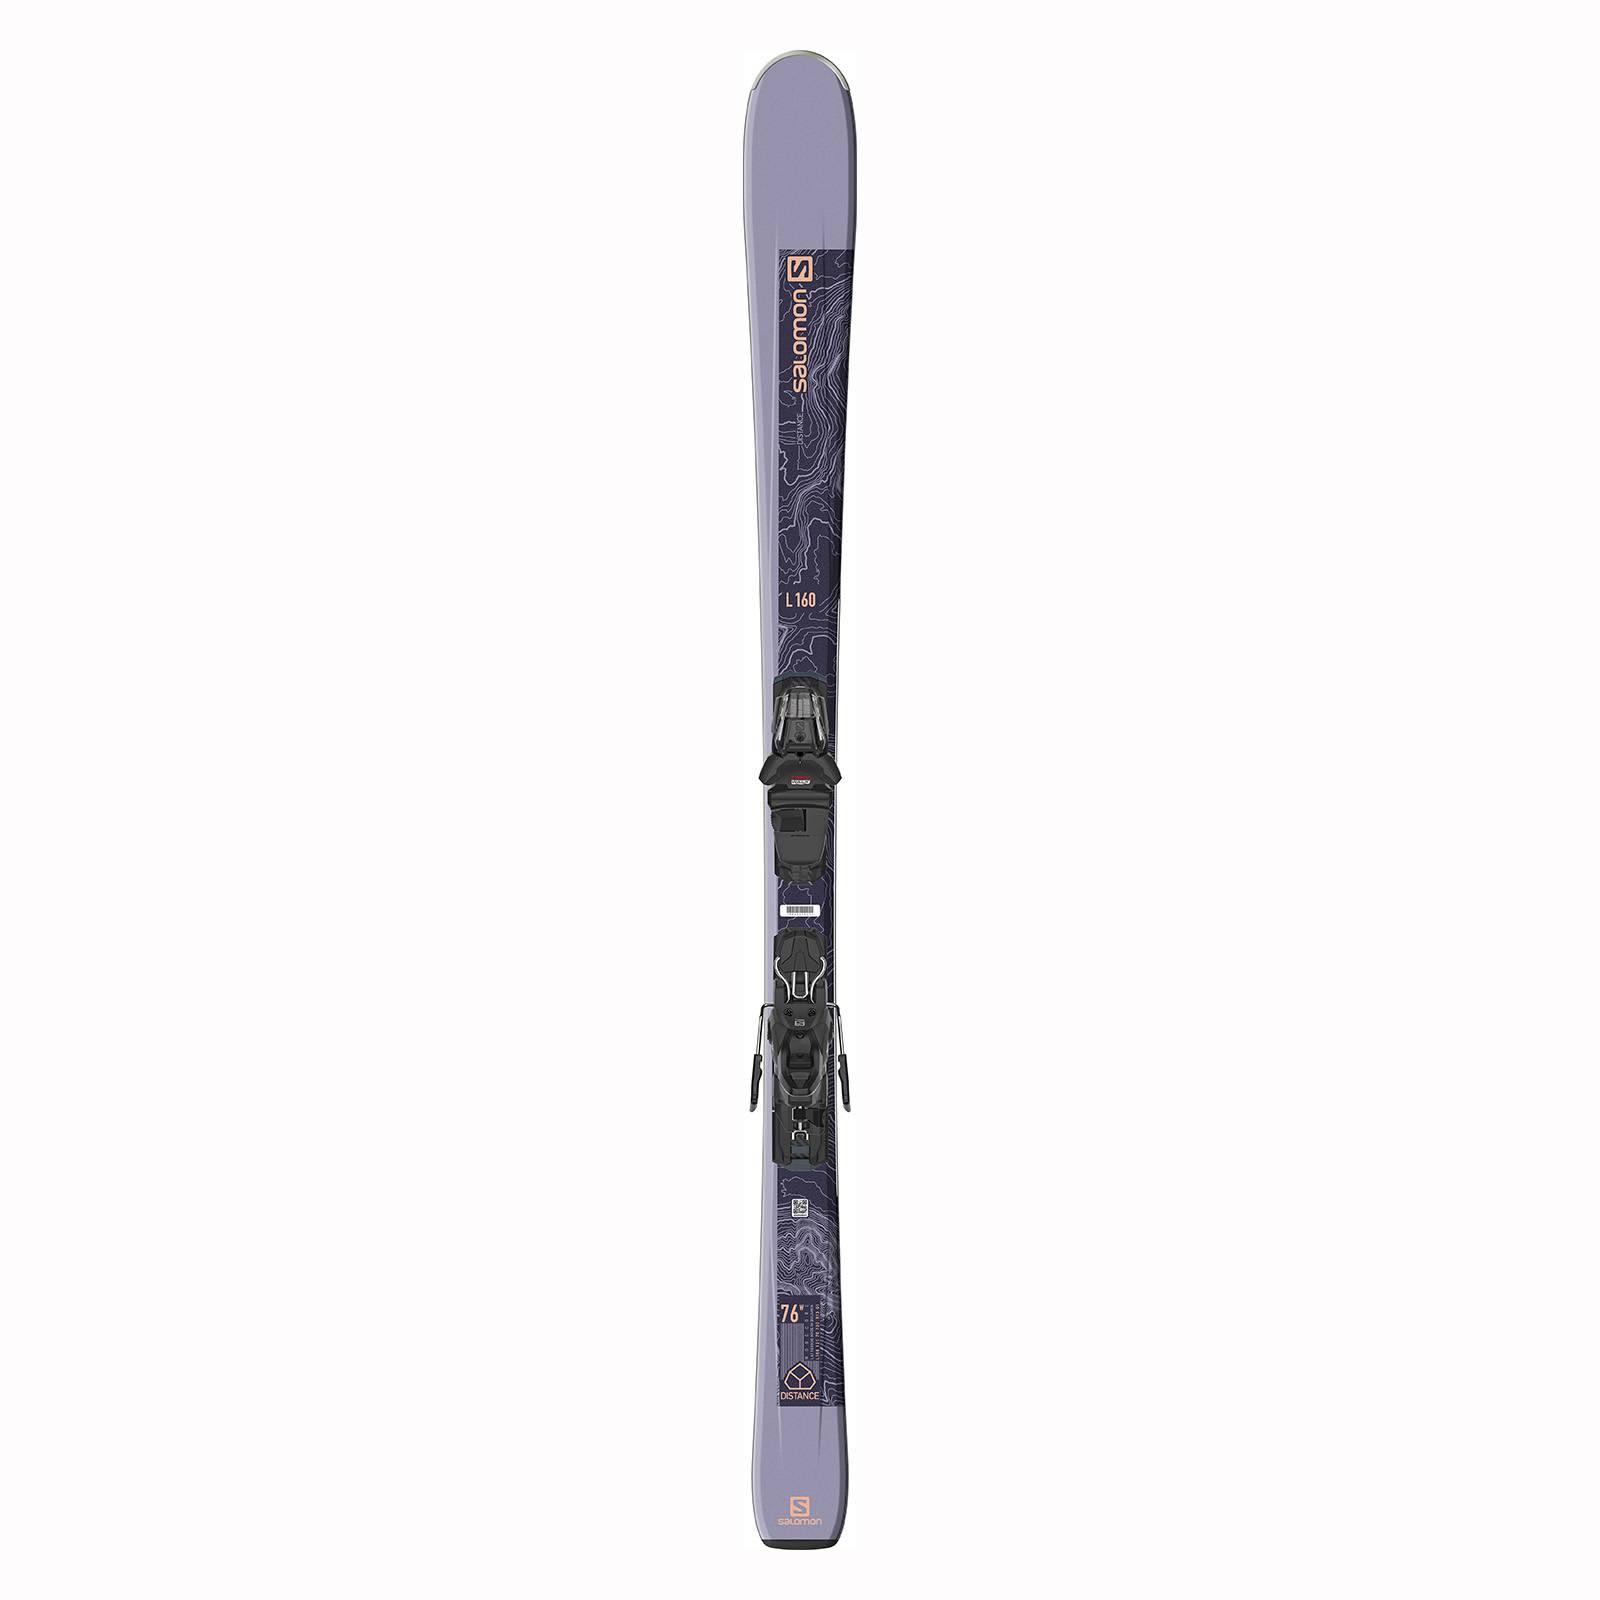 Salomon Distance 76+m10 Gw Alpine Skis Grey 170